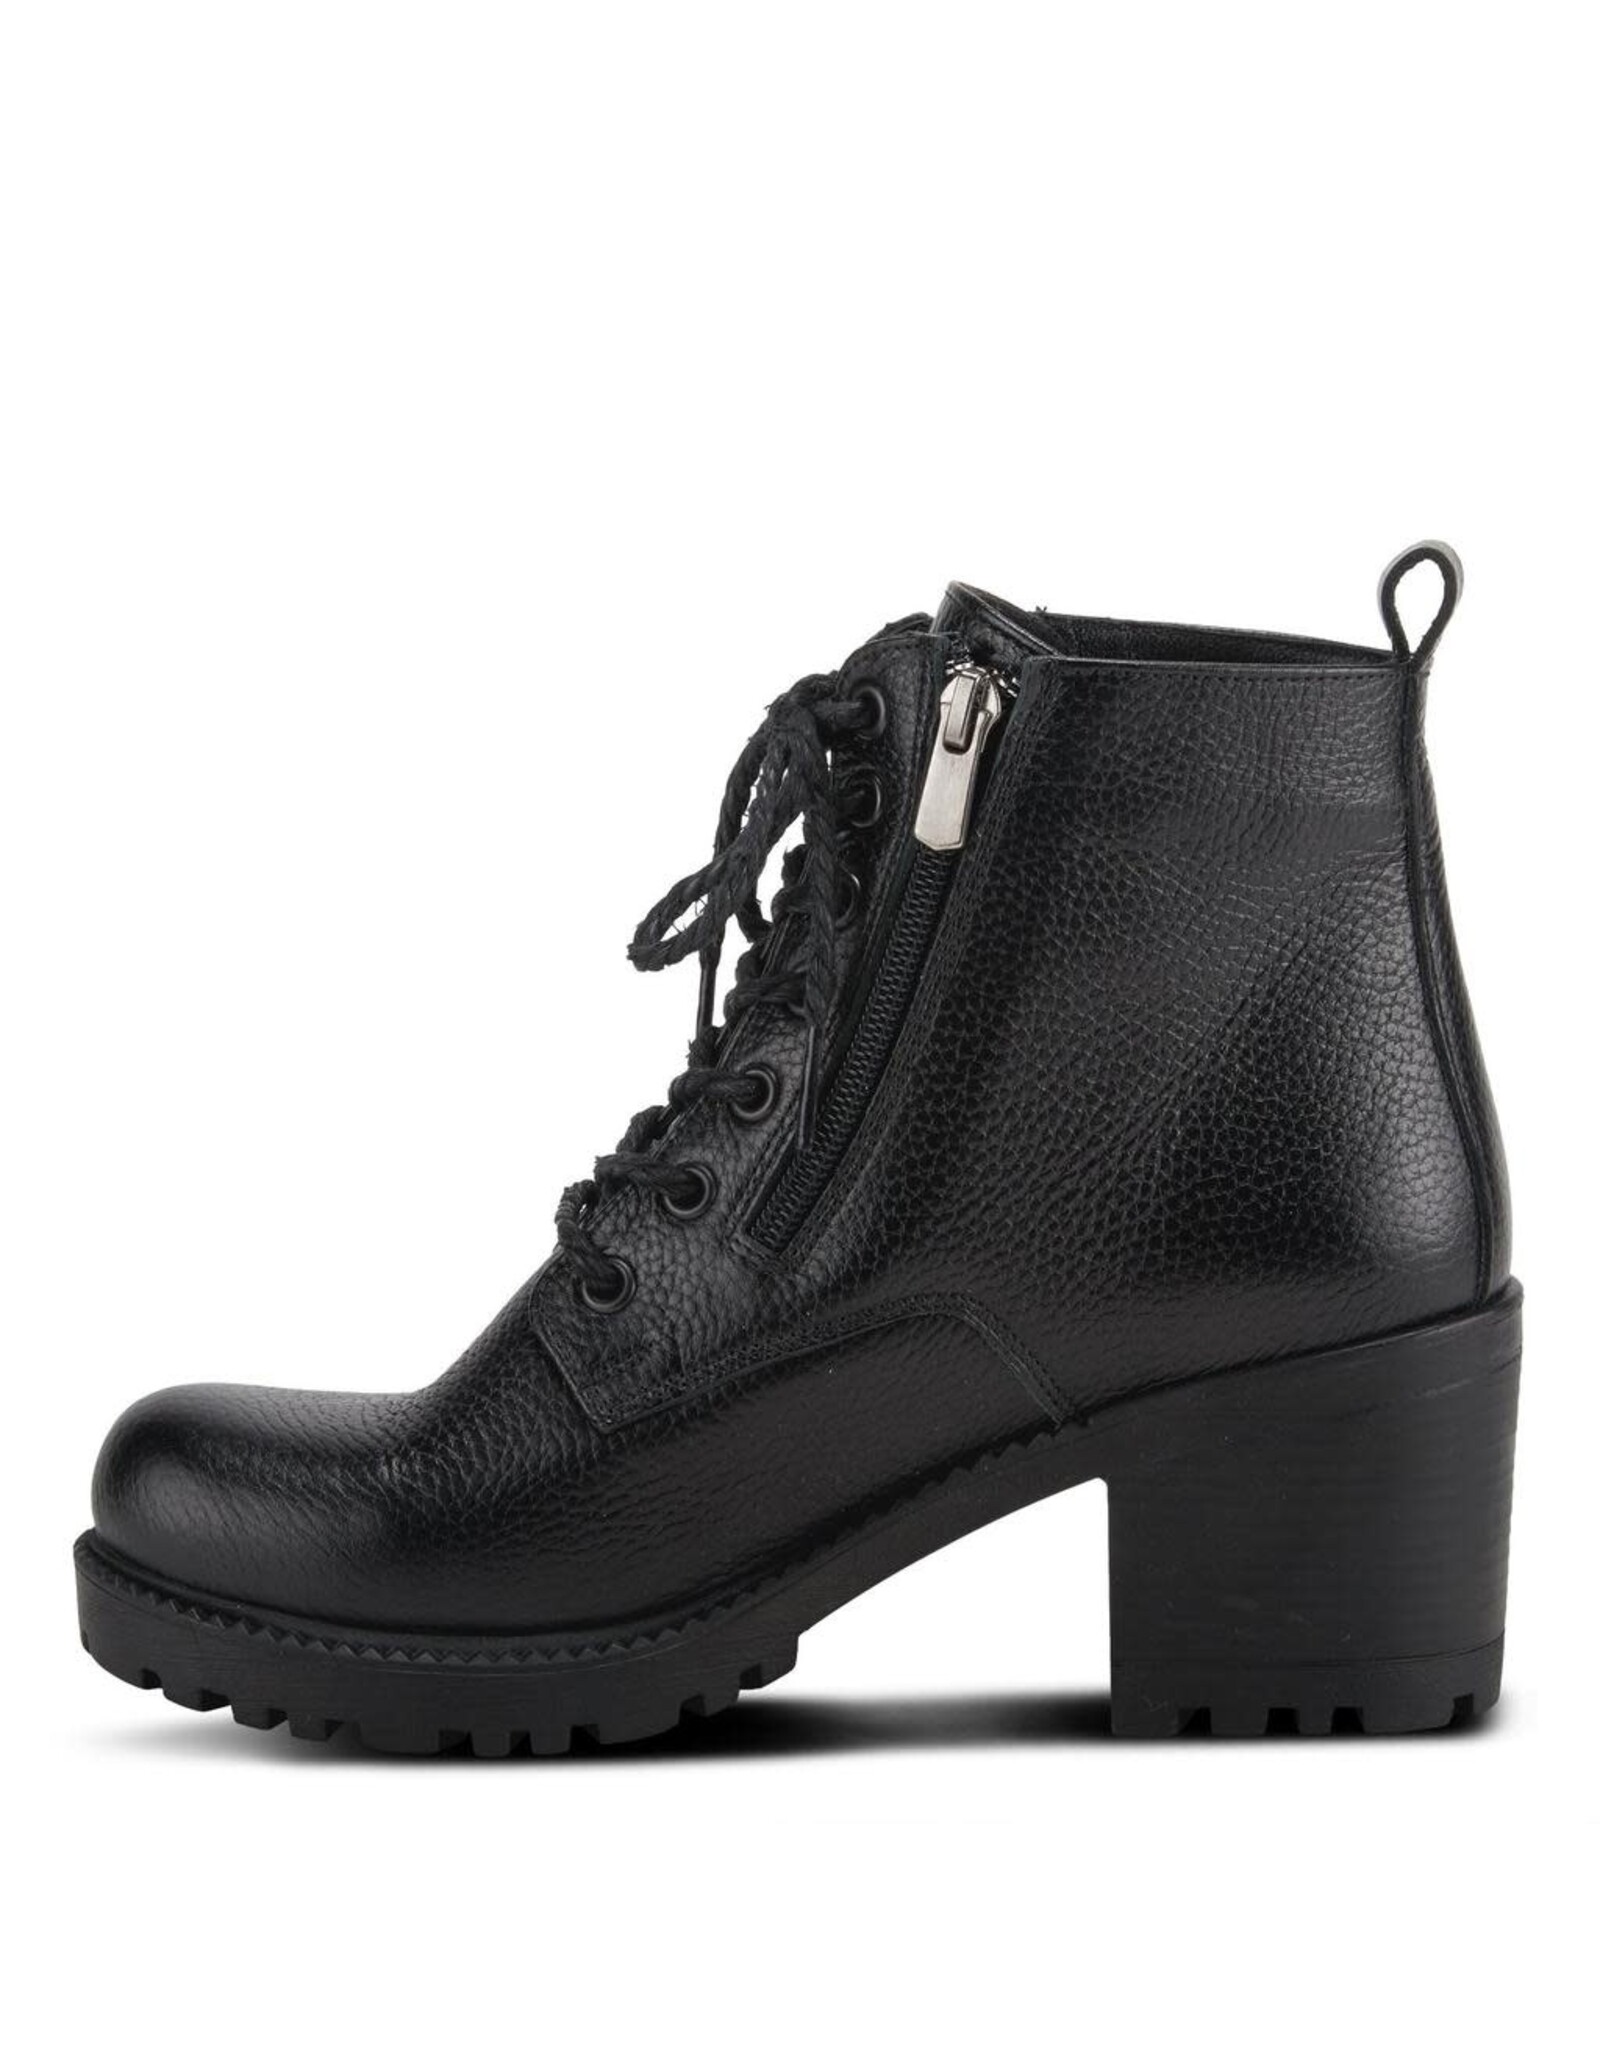 Spring Footwear Yaritza Black Leather Boot